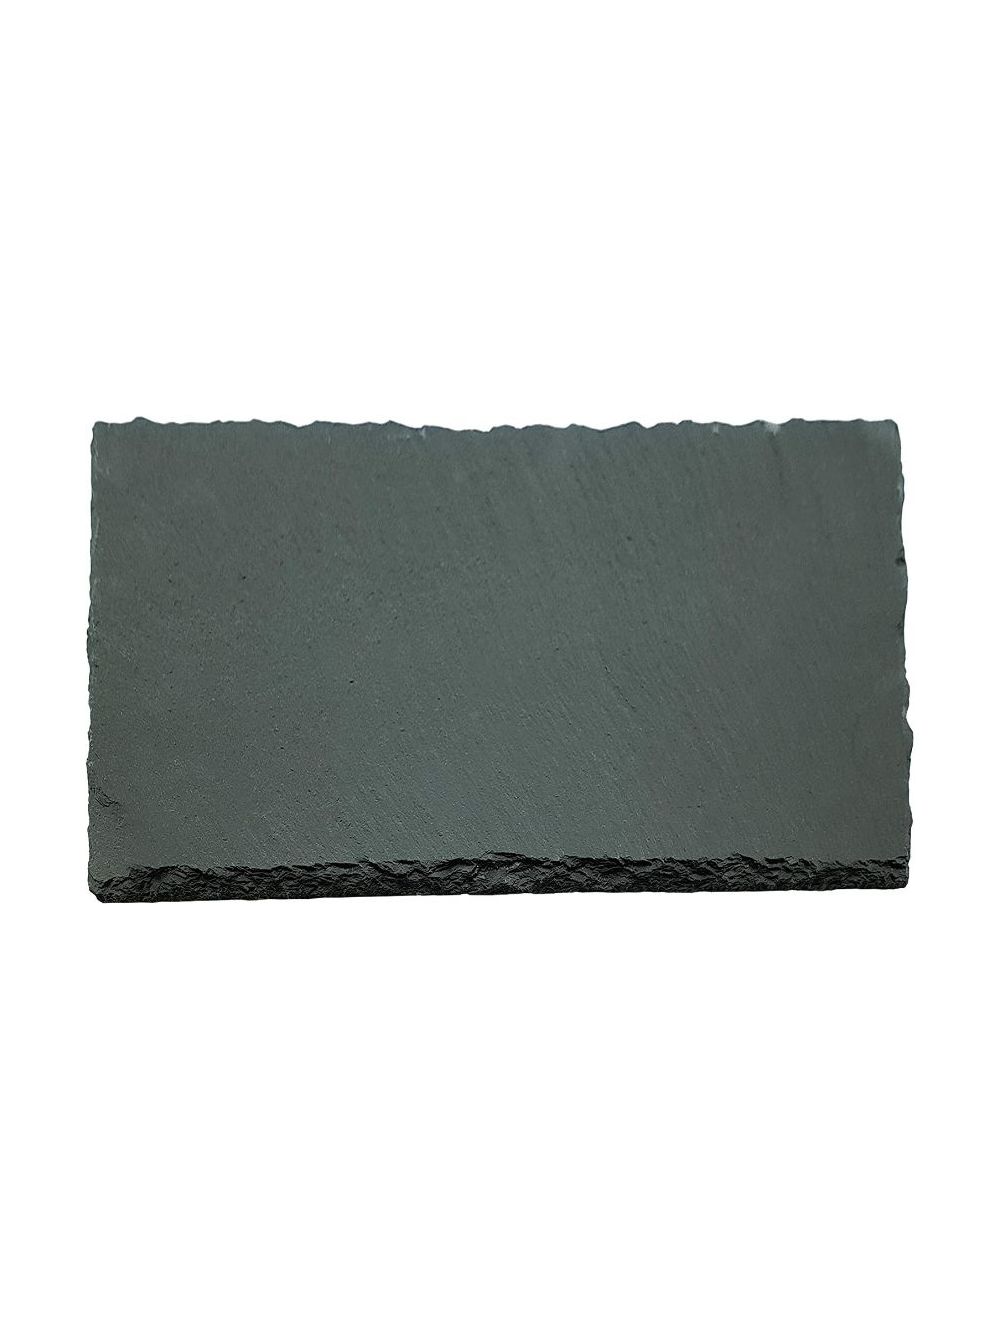 Kitchen Master-SL0004, Rectangle Slate Plate 26x16 cm, Black